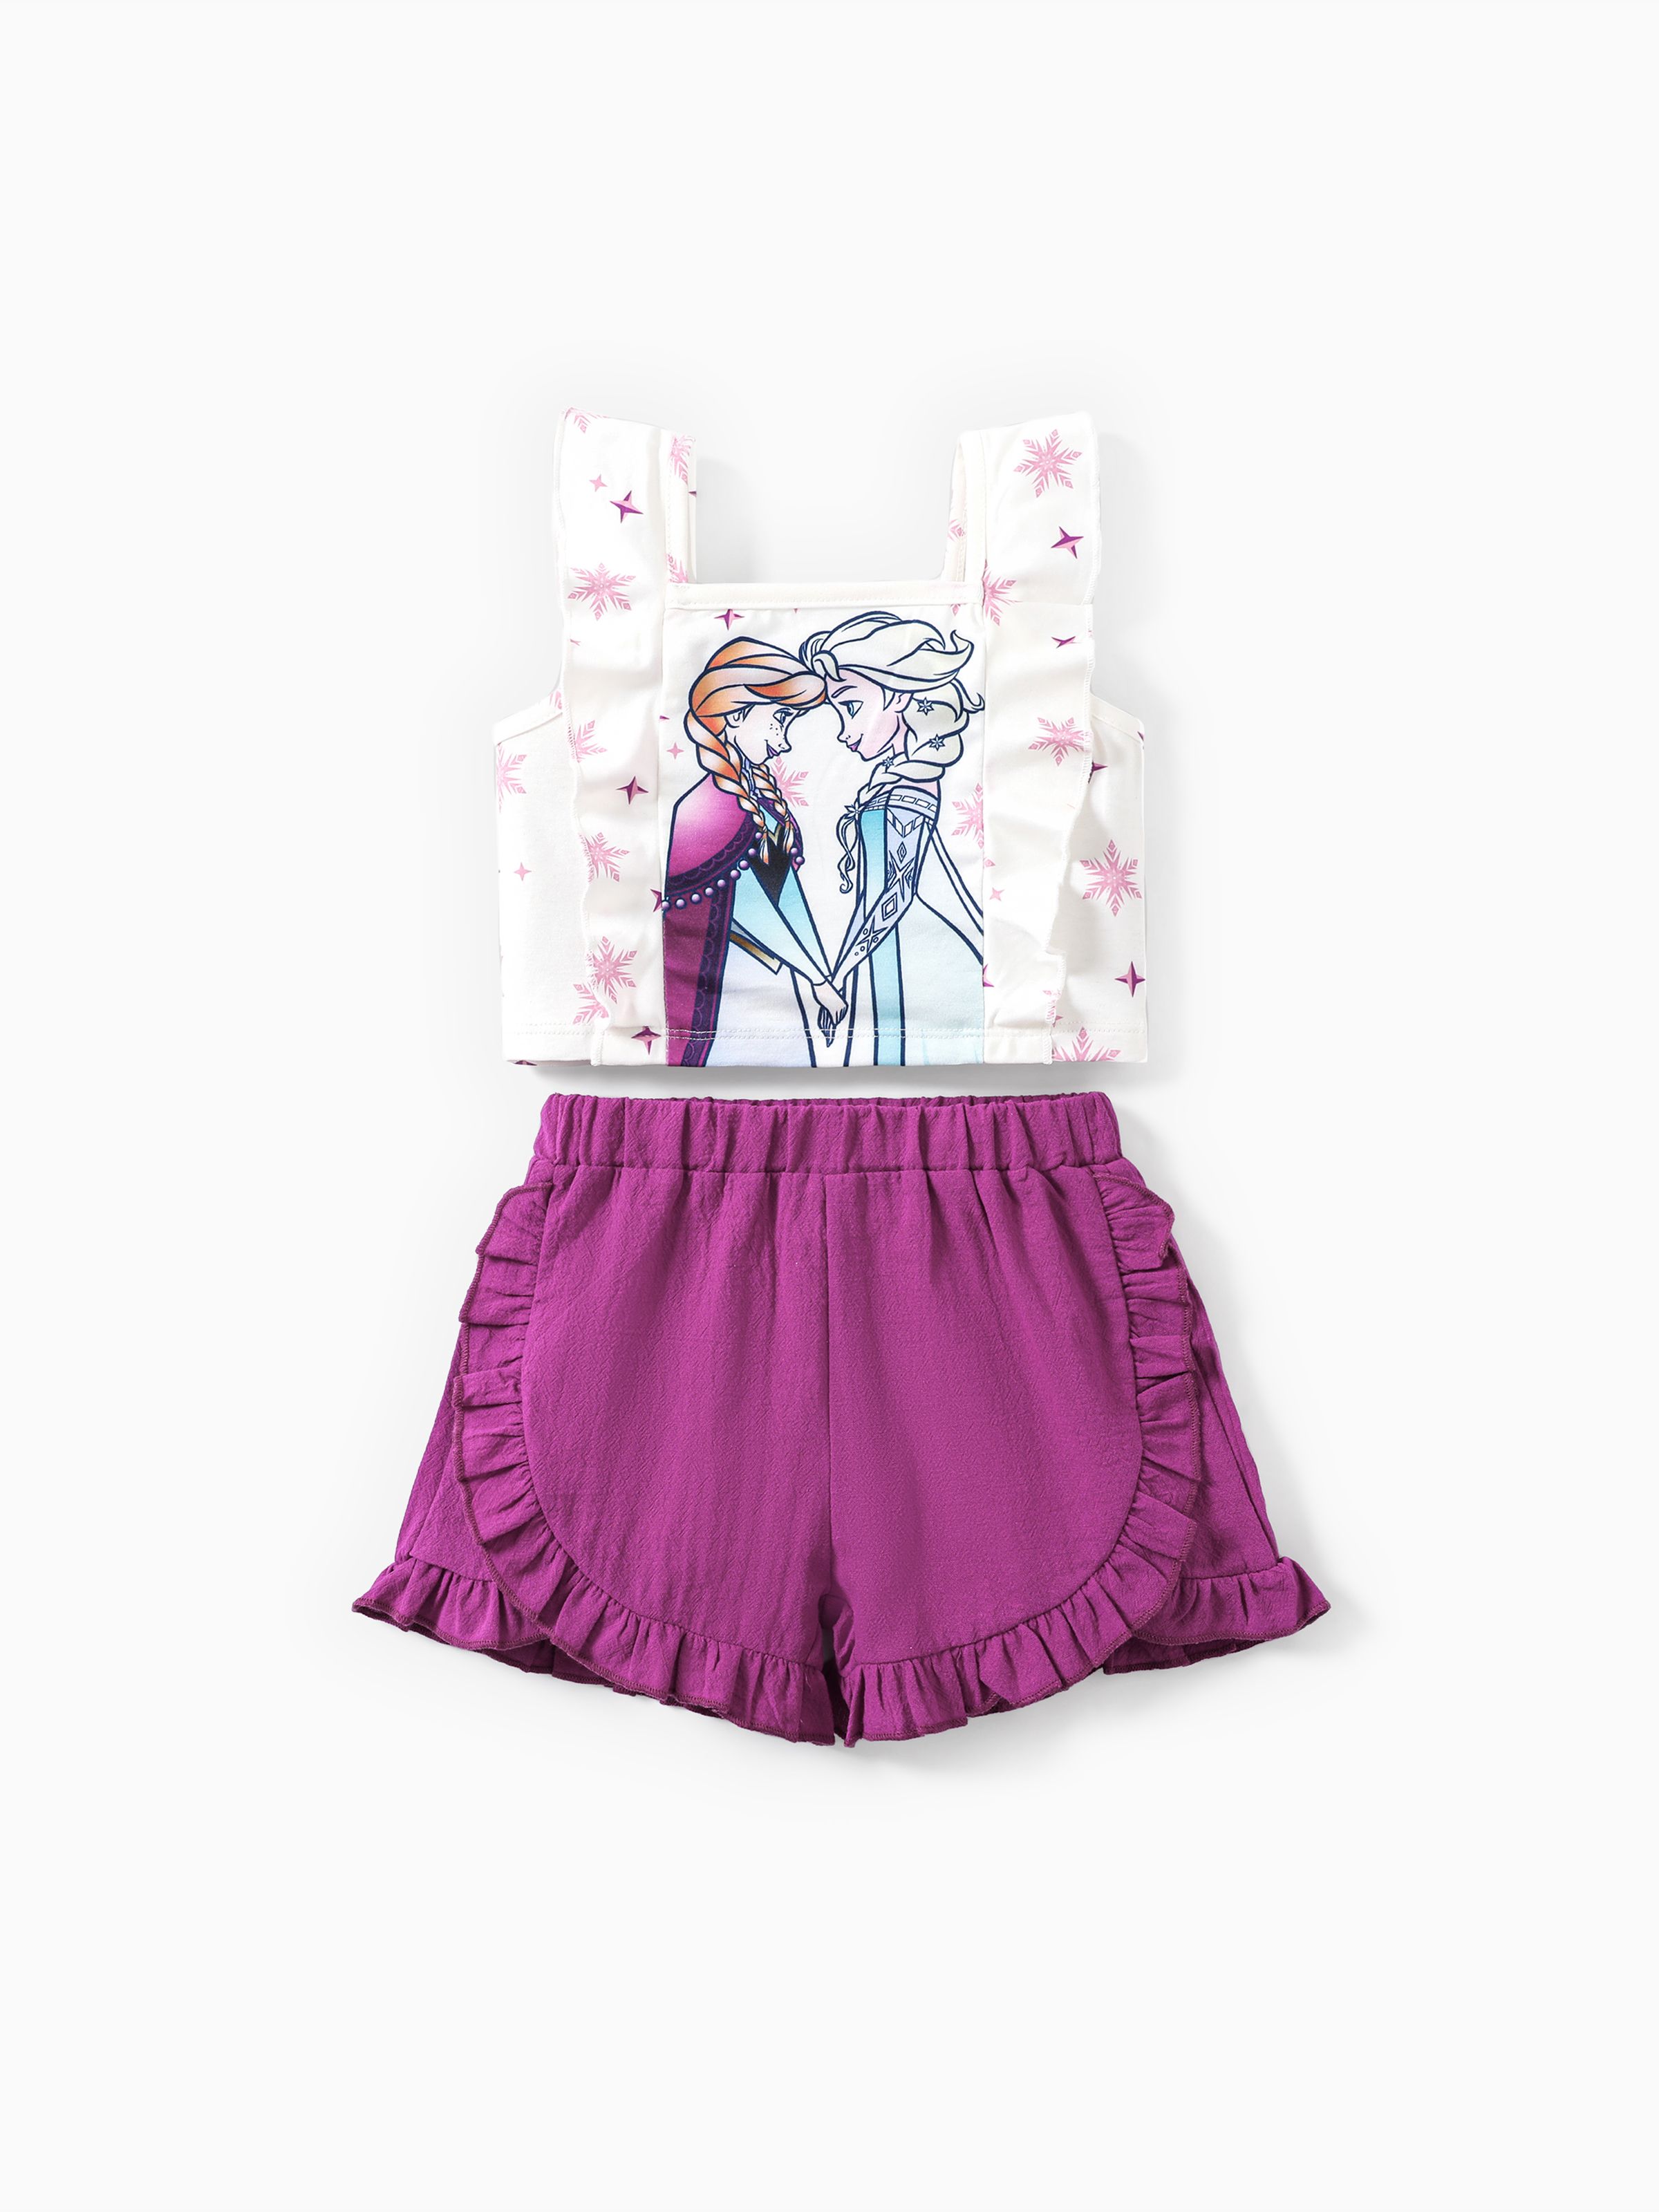 

Disney Frozen Elsa & Anna 2pcs Naia™ Gradient Print Camisole with Ruffled Shorts Set